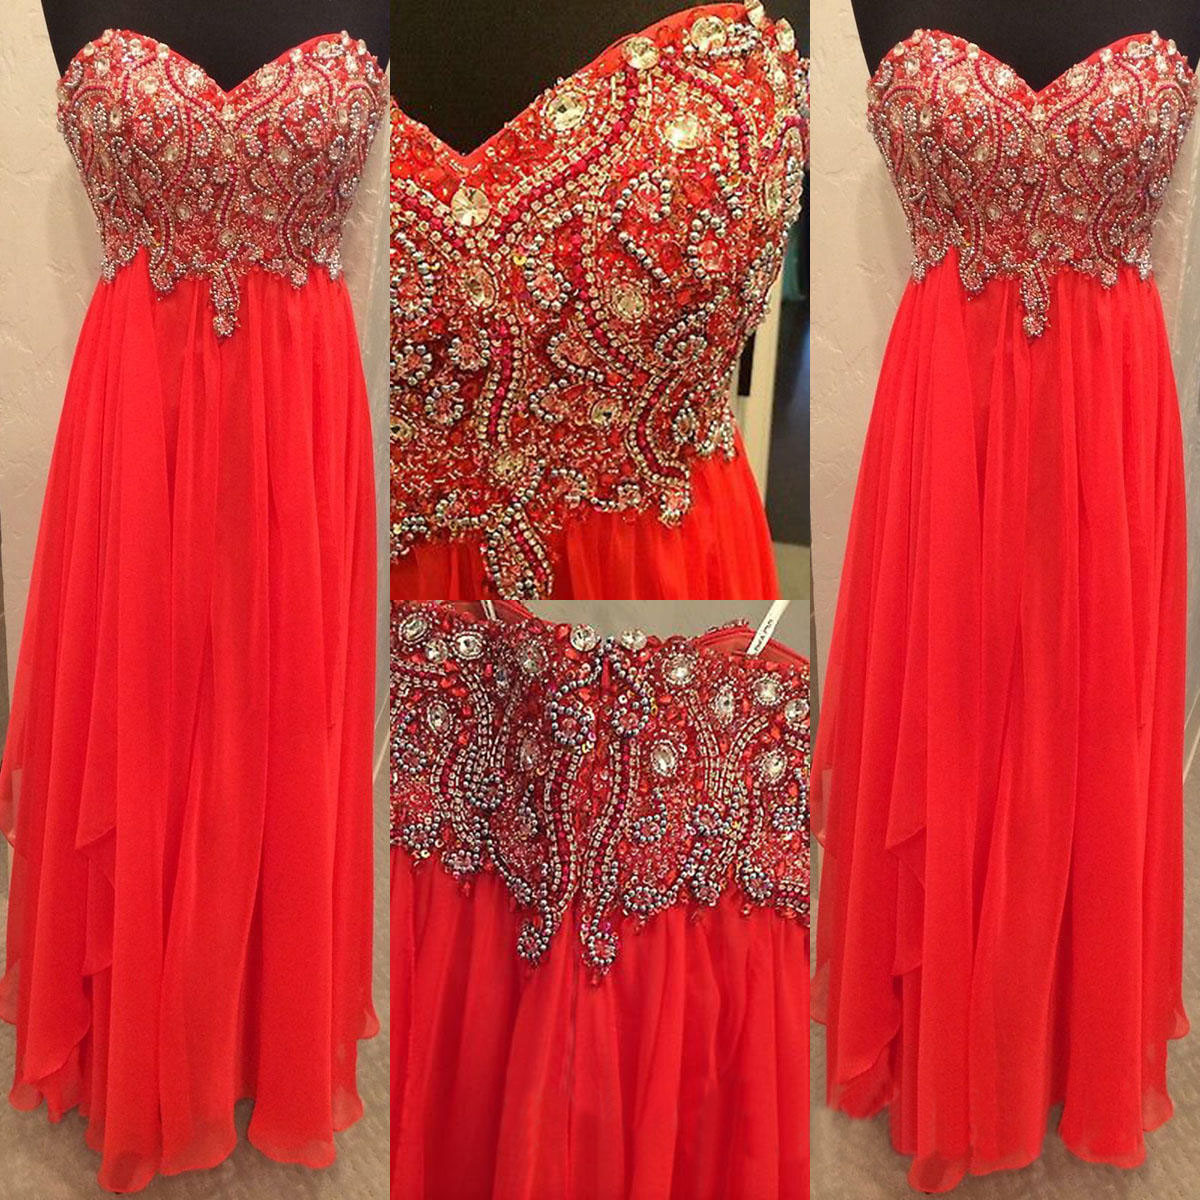 Long Prom Dress, Red Prom Dress, Sweetheart Prom Dress, Prom Dress, Party Prom Dress, Prom Dress With Beading, Long Evening Dress